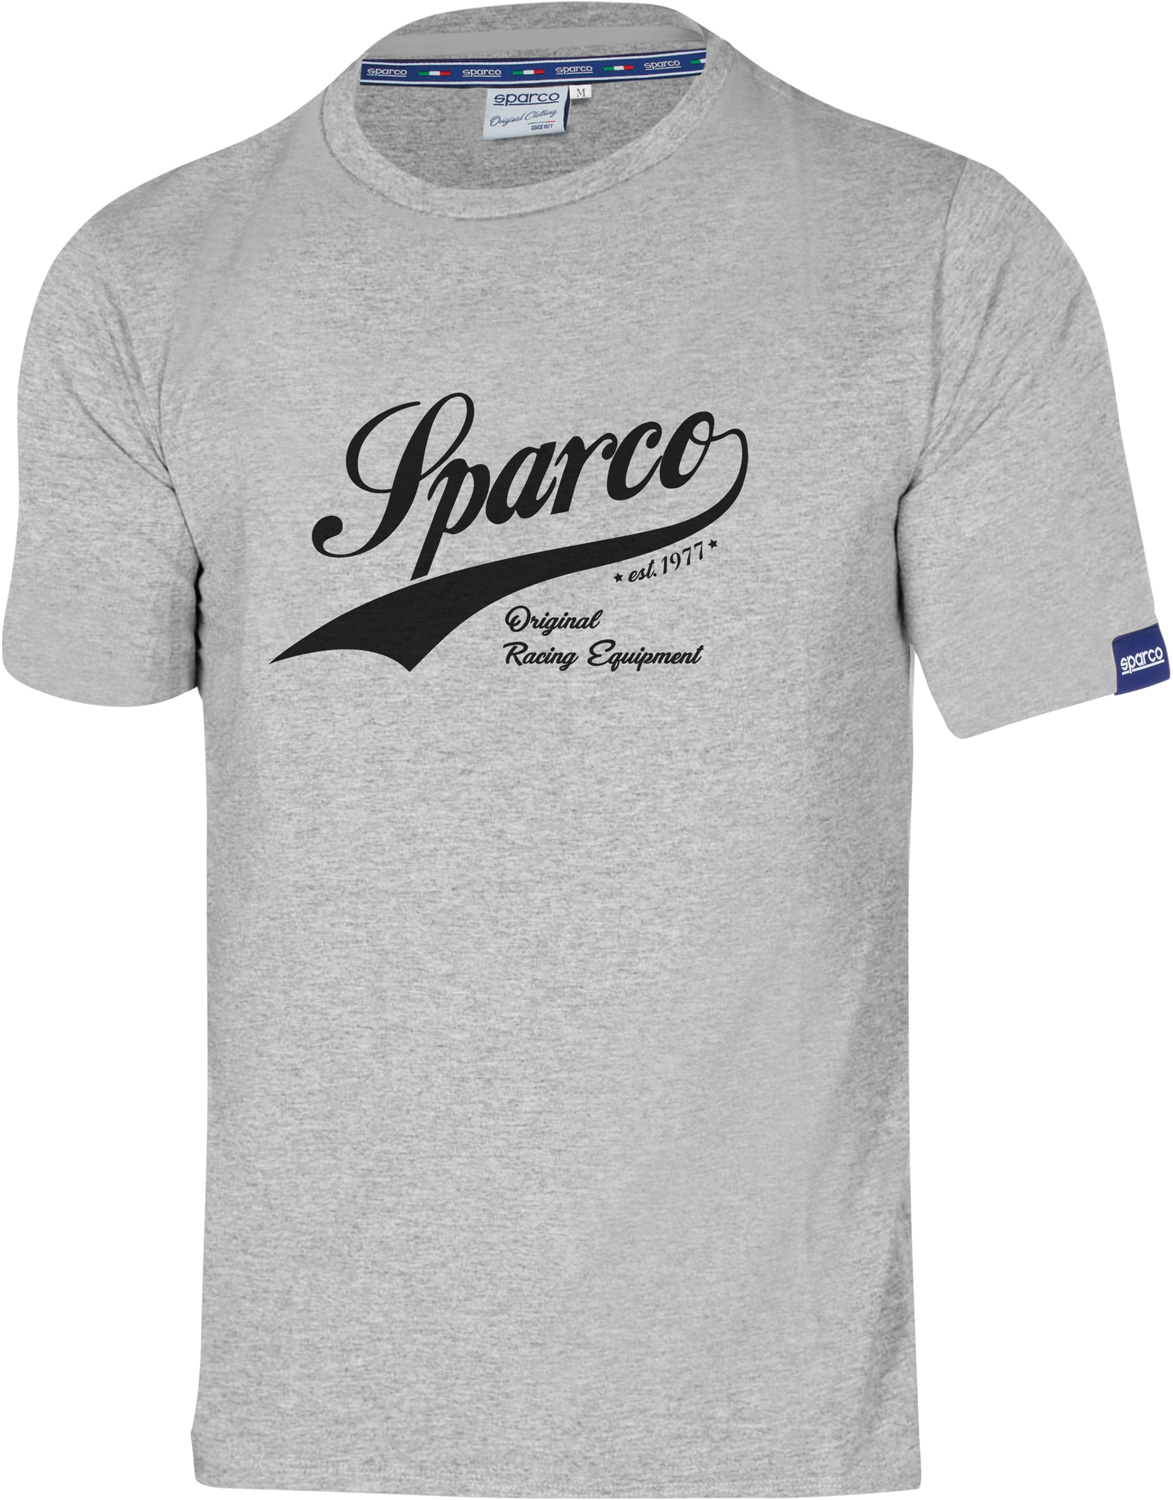 Sparco T-Shirt Vintage